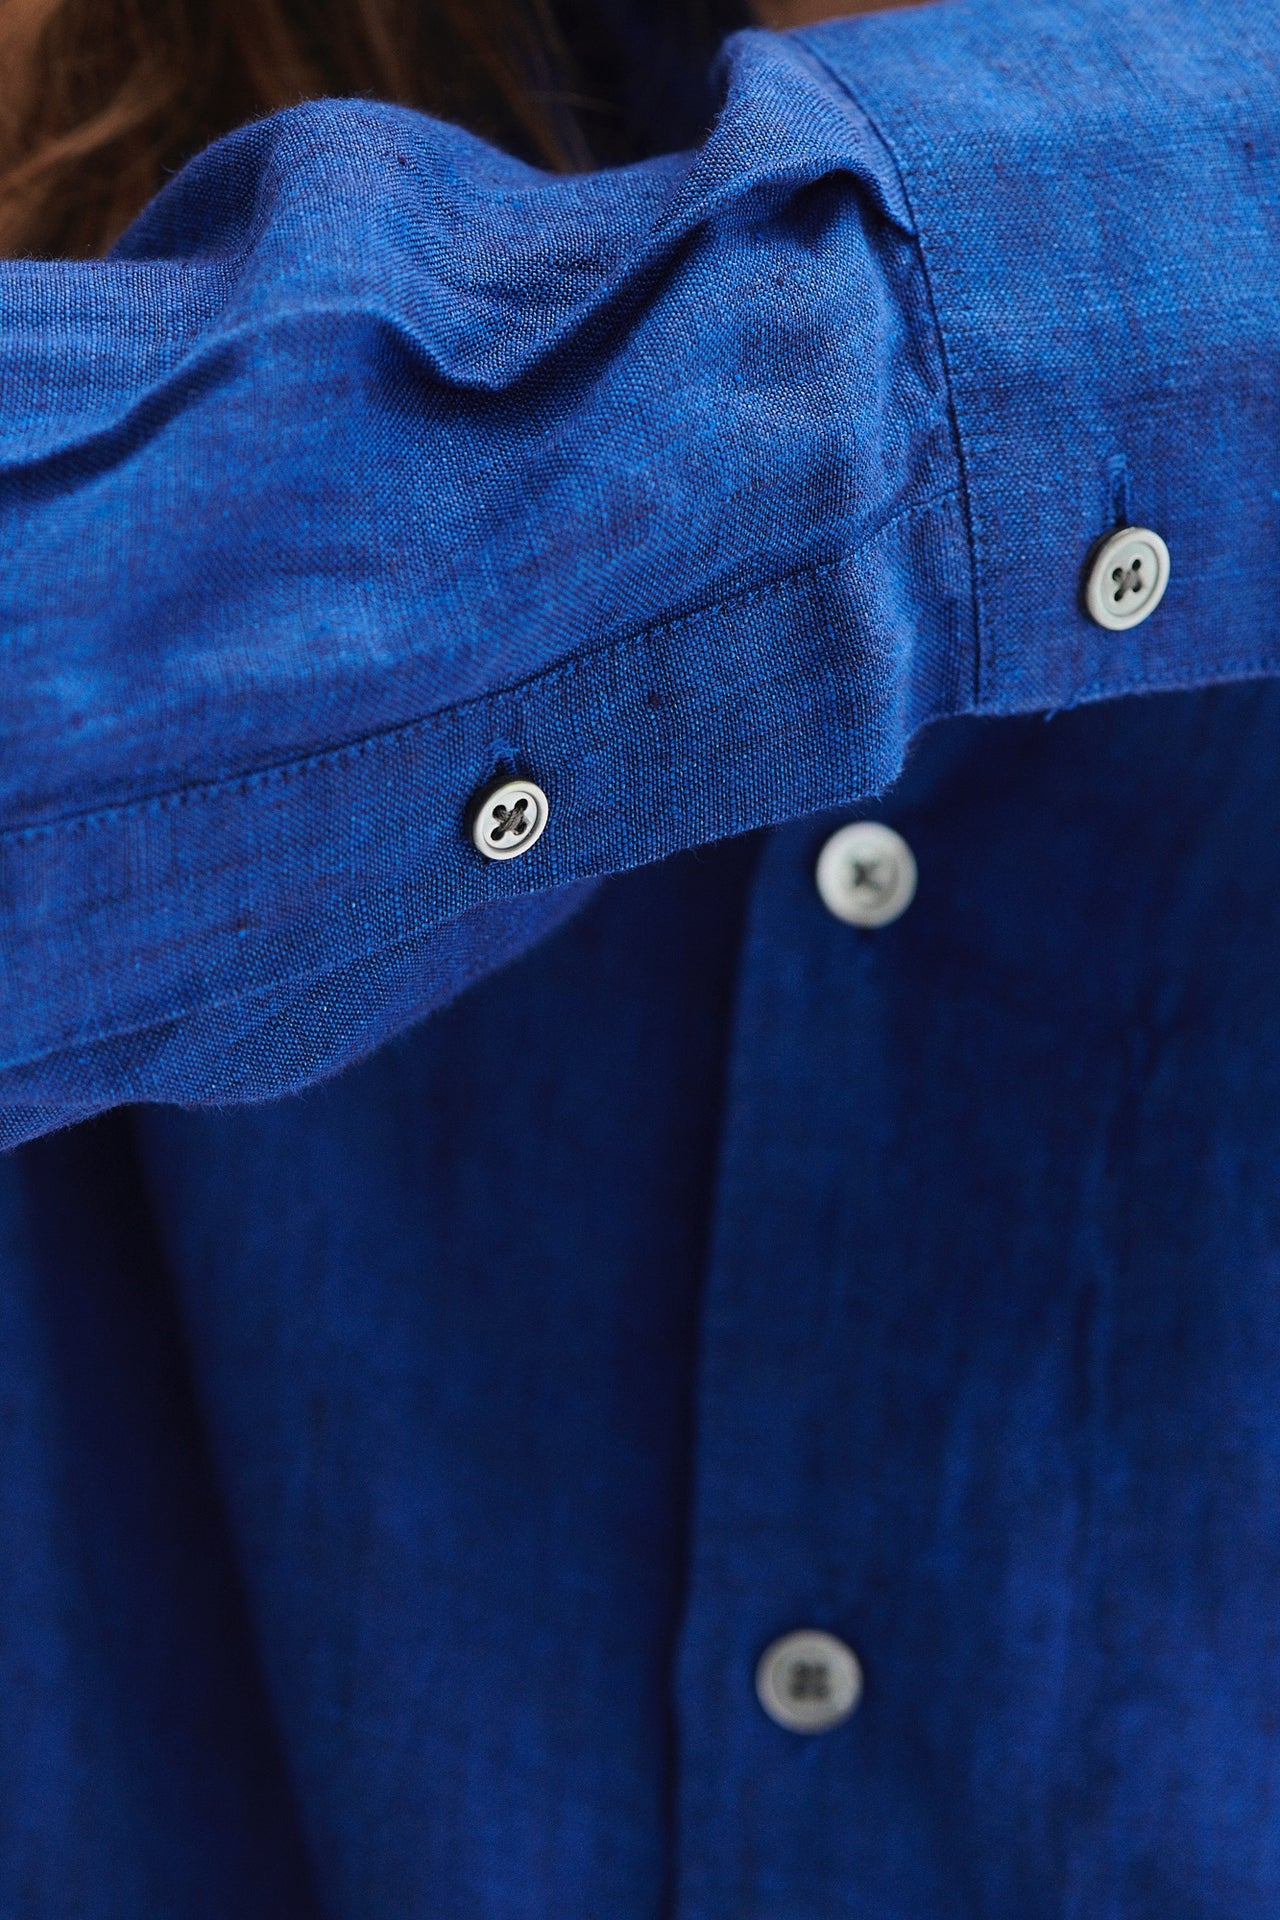 Feel Good Shirt in a Soft and Airy Cobalt Blue Bohemian Linen